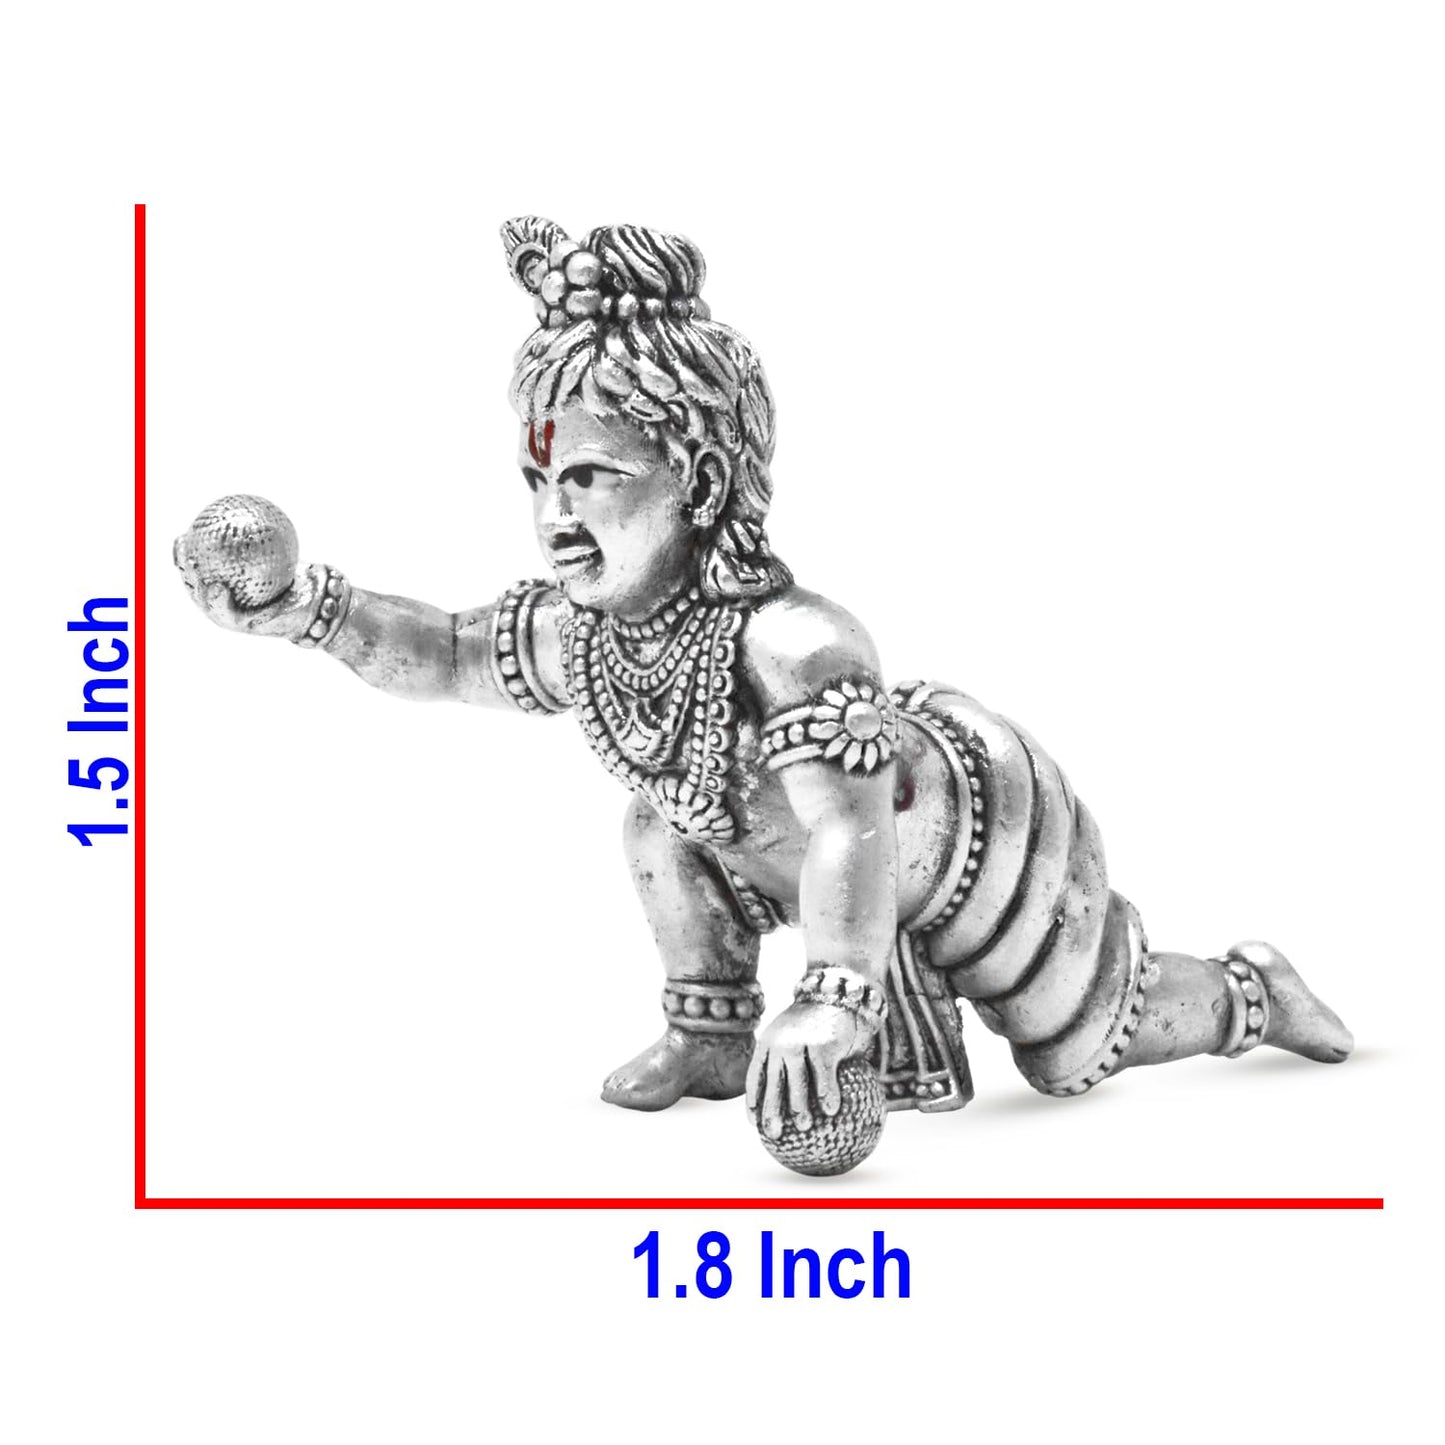 size of bal krishna idol